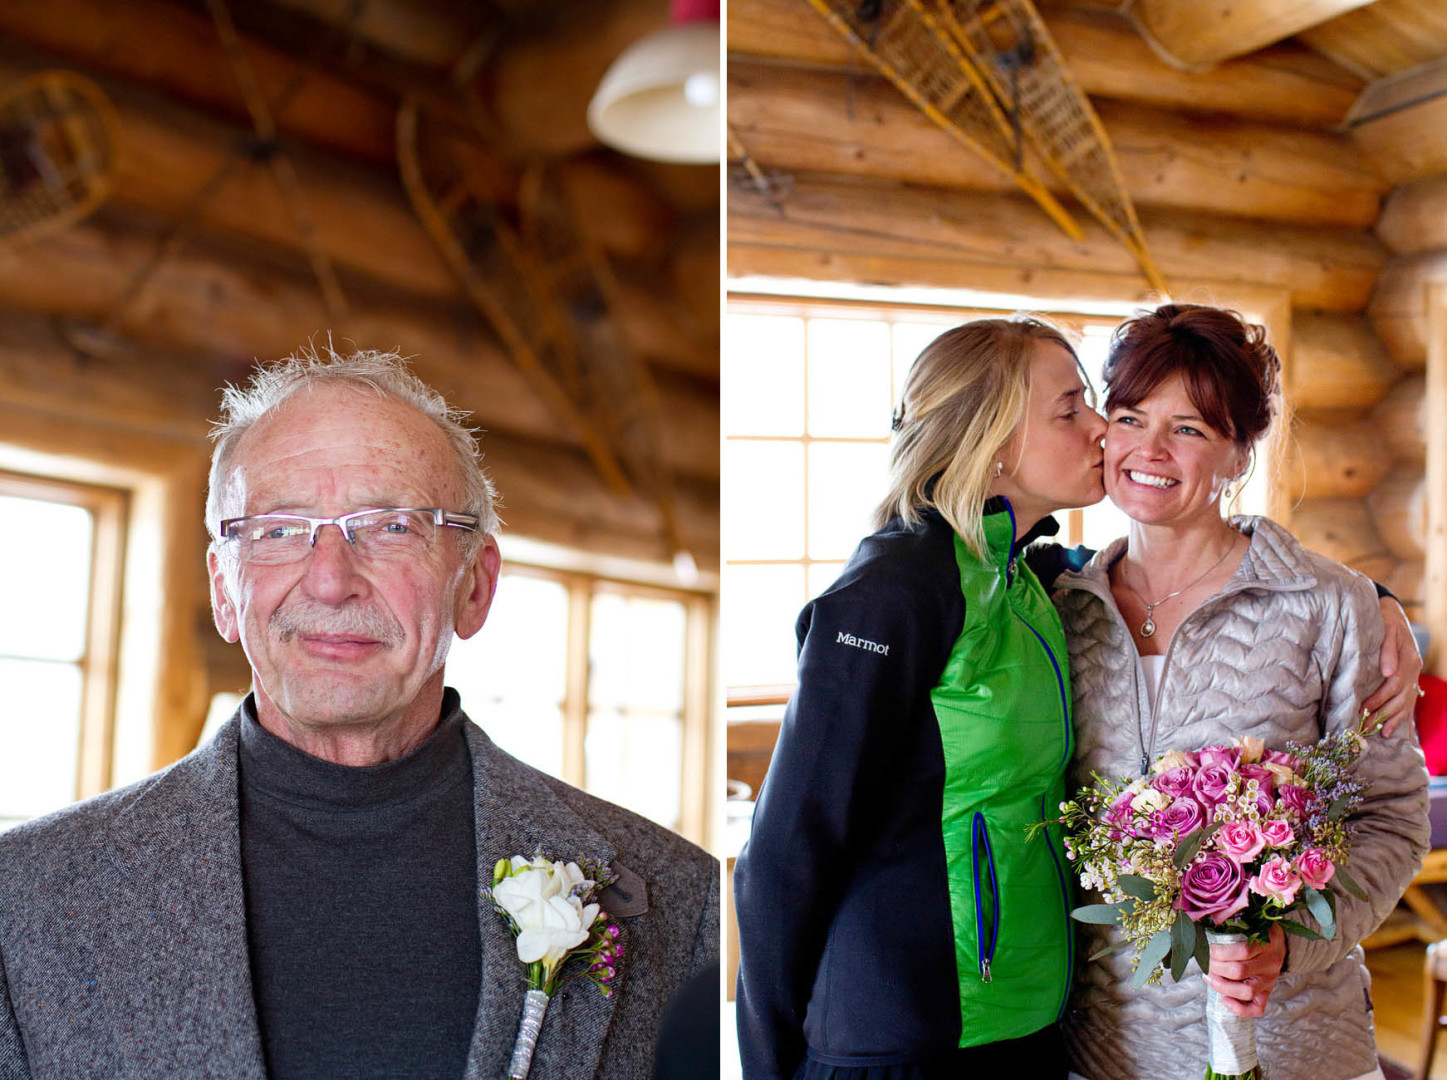 Shrine Mountain Wedding, Vail, Colorado Photographer,InternationalPhotographer, Desiree Mostad, bryllup fotograf, Rivetsand Roses,Scandinavian Wedding, Snowy Spring